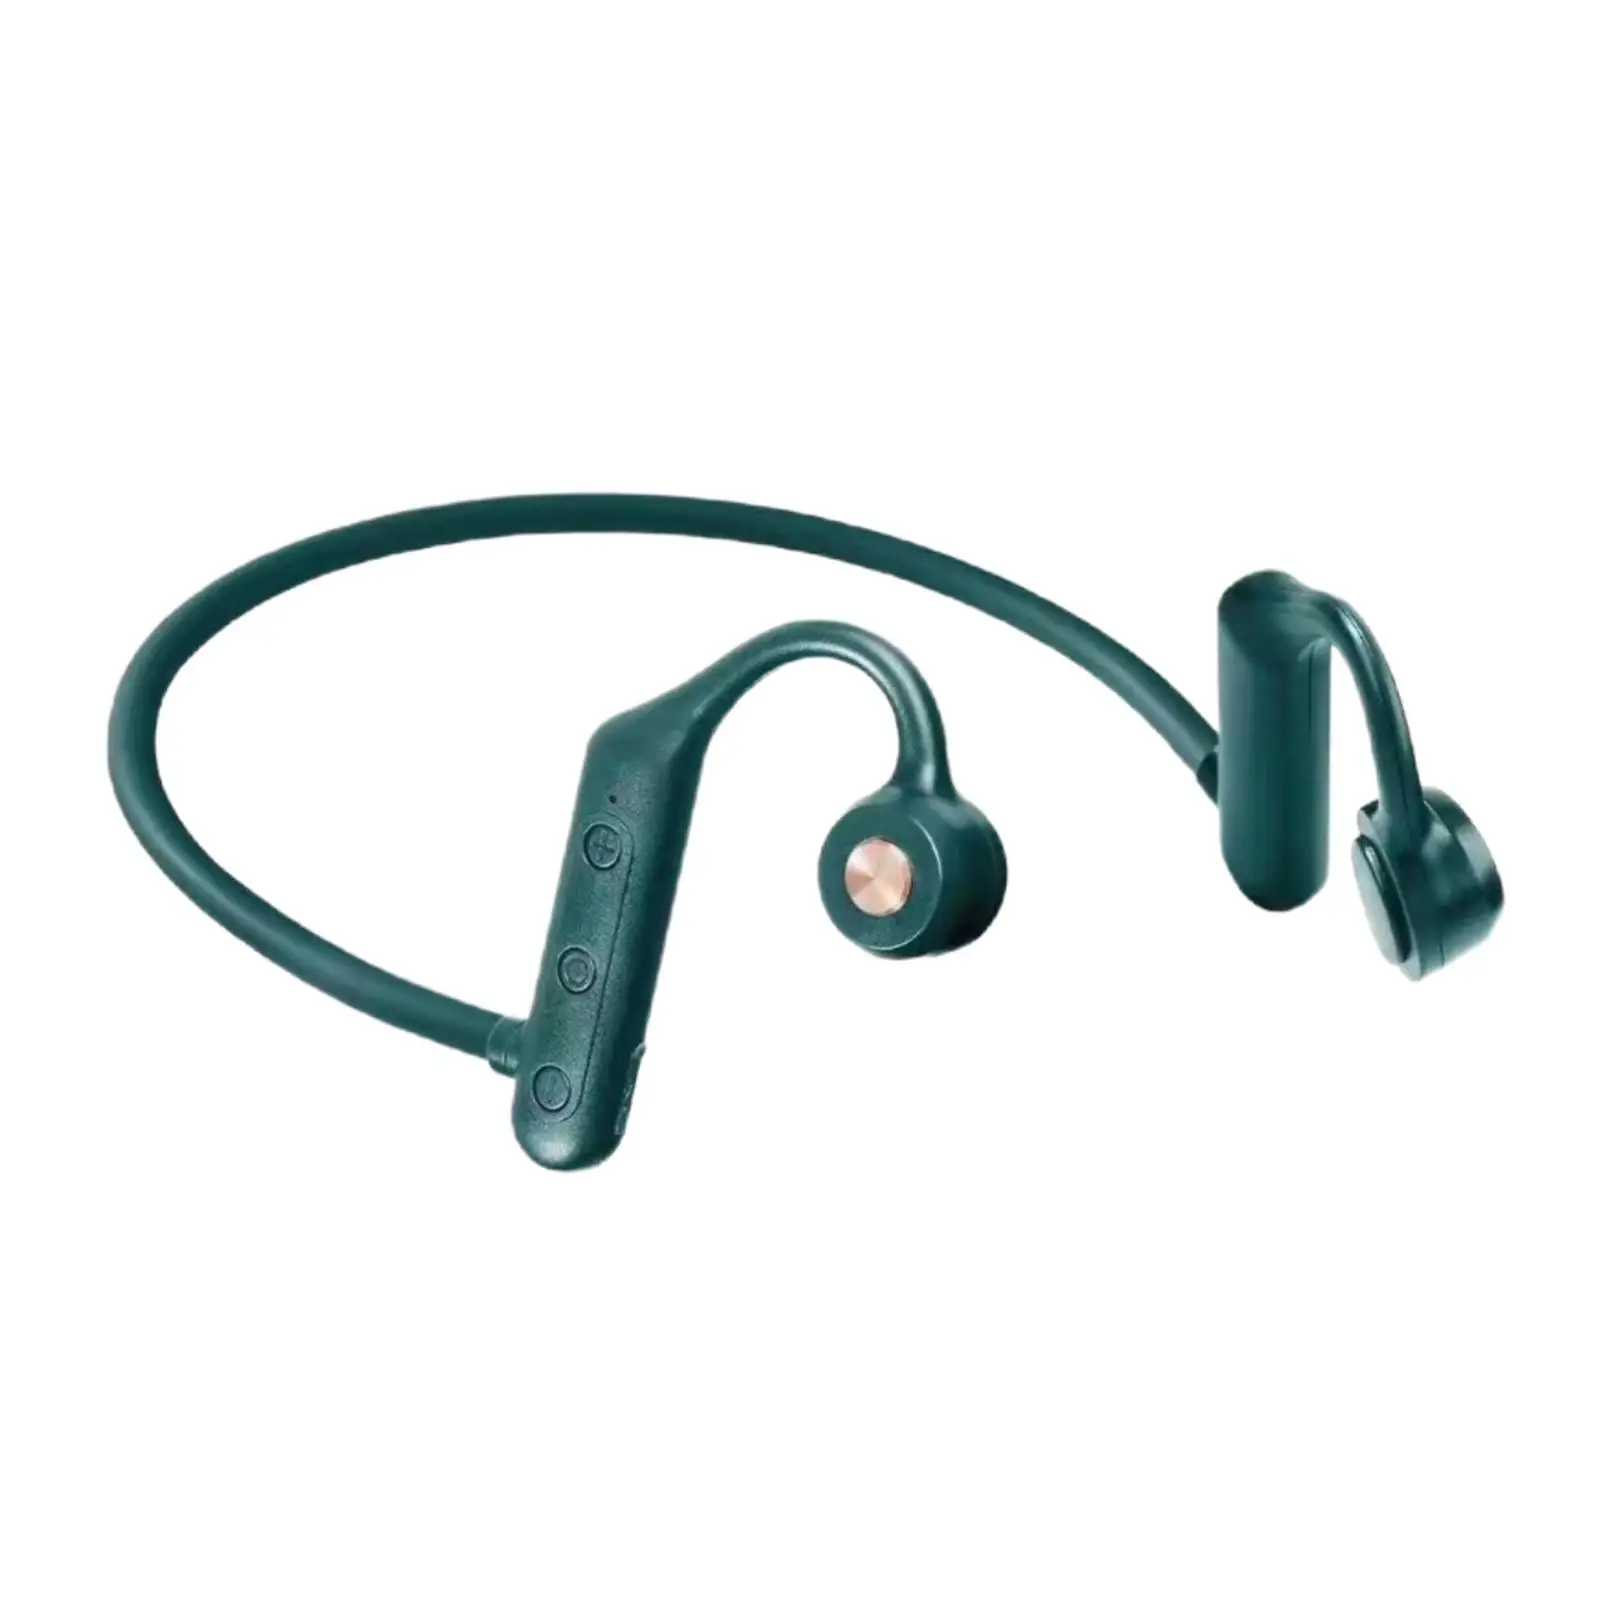 Bluetooth Bone Conduction Headphones Open Ear Earphone 10 Meters Transmission Range